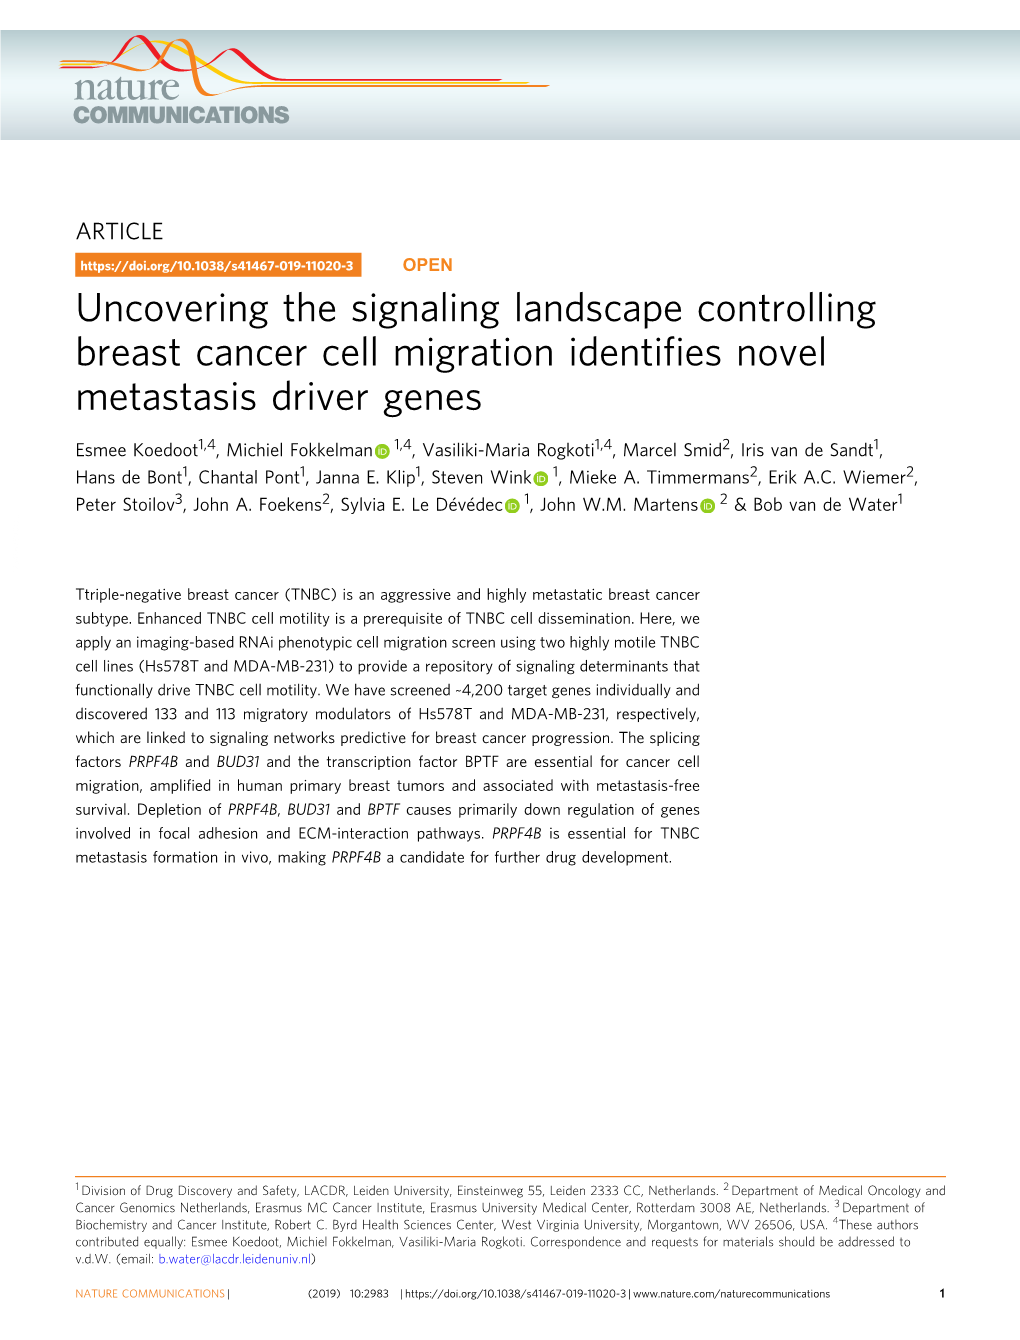 Uncovering the Signaling Landscape Controlling Breast Cancer Cell Migration Identiﬁes Novel Metastasis Driver Genes